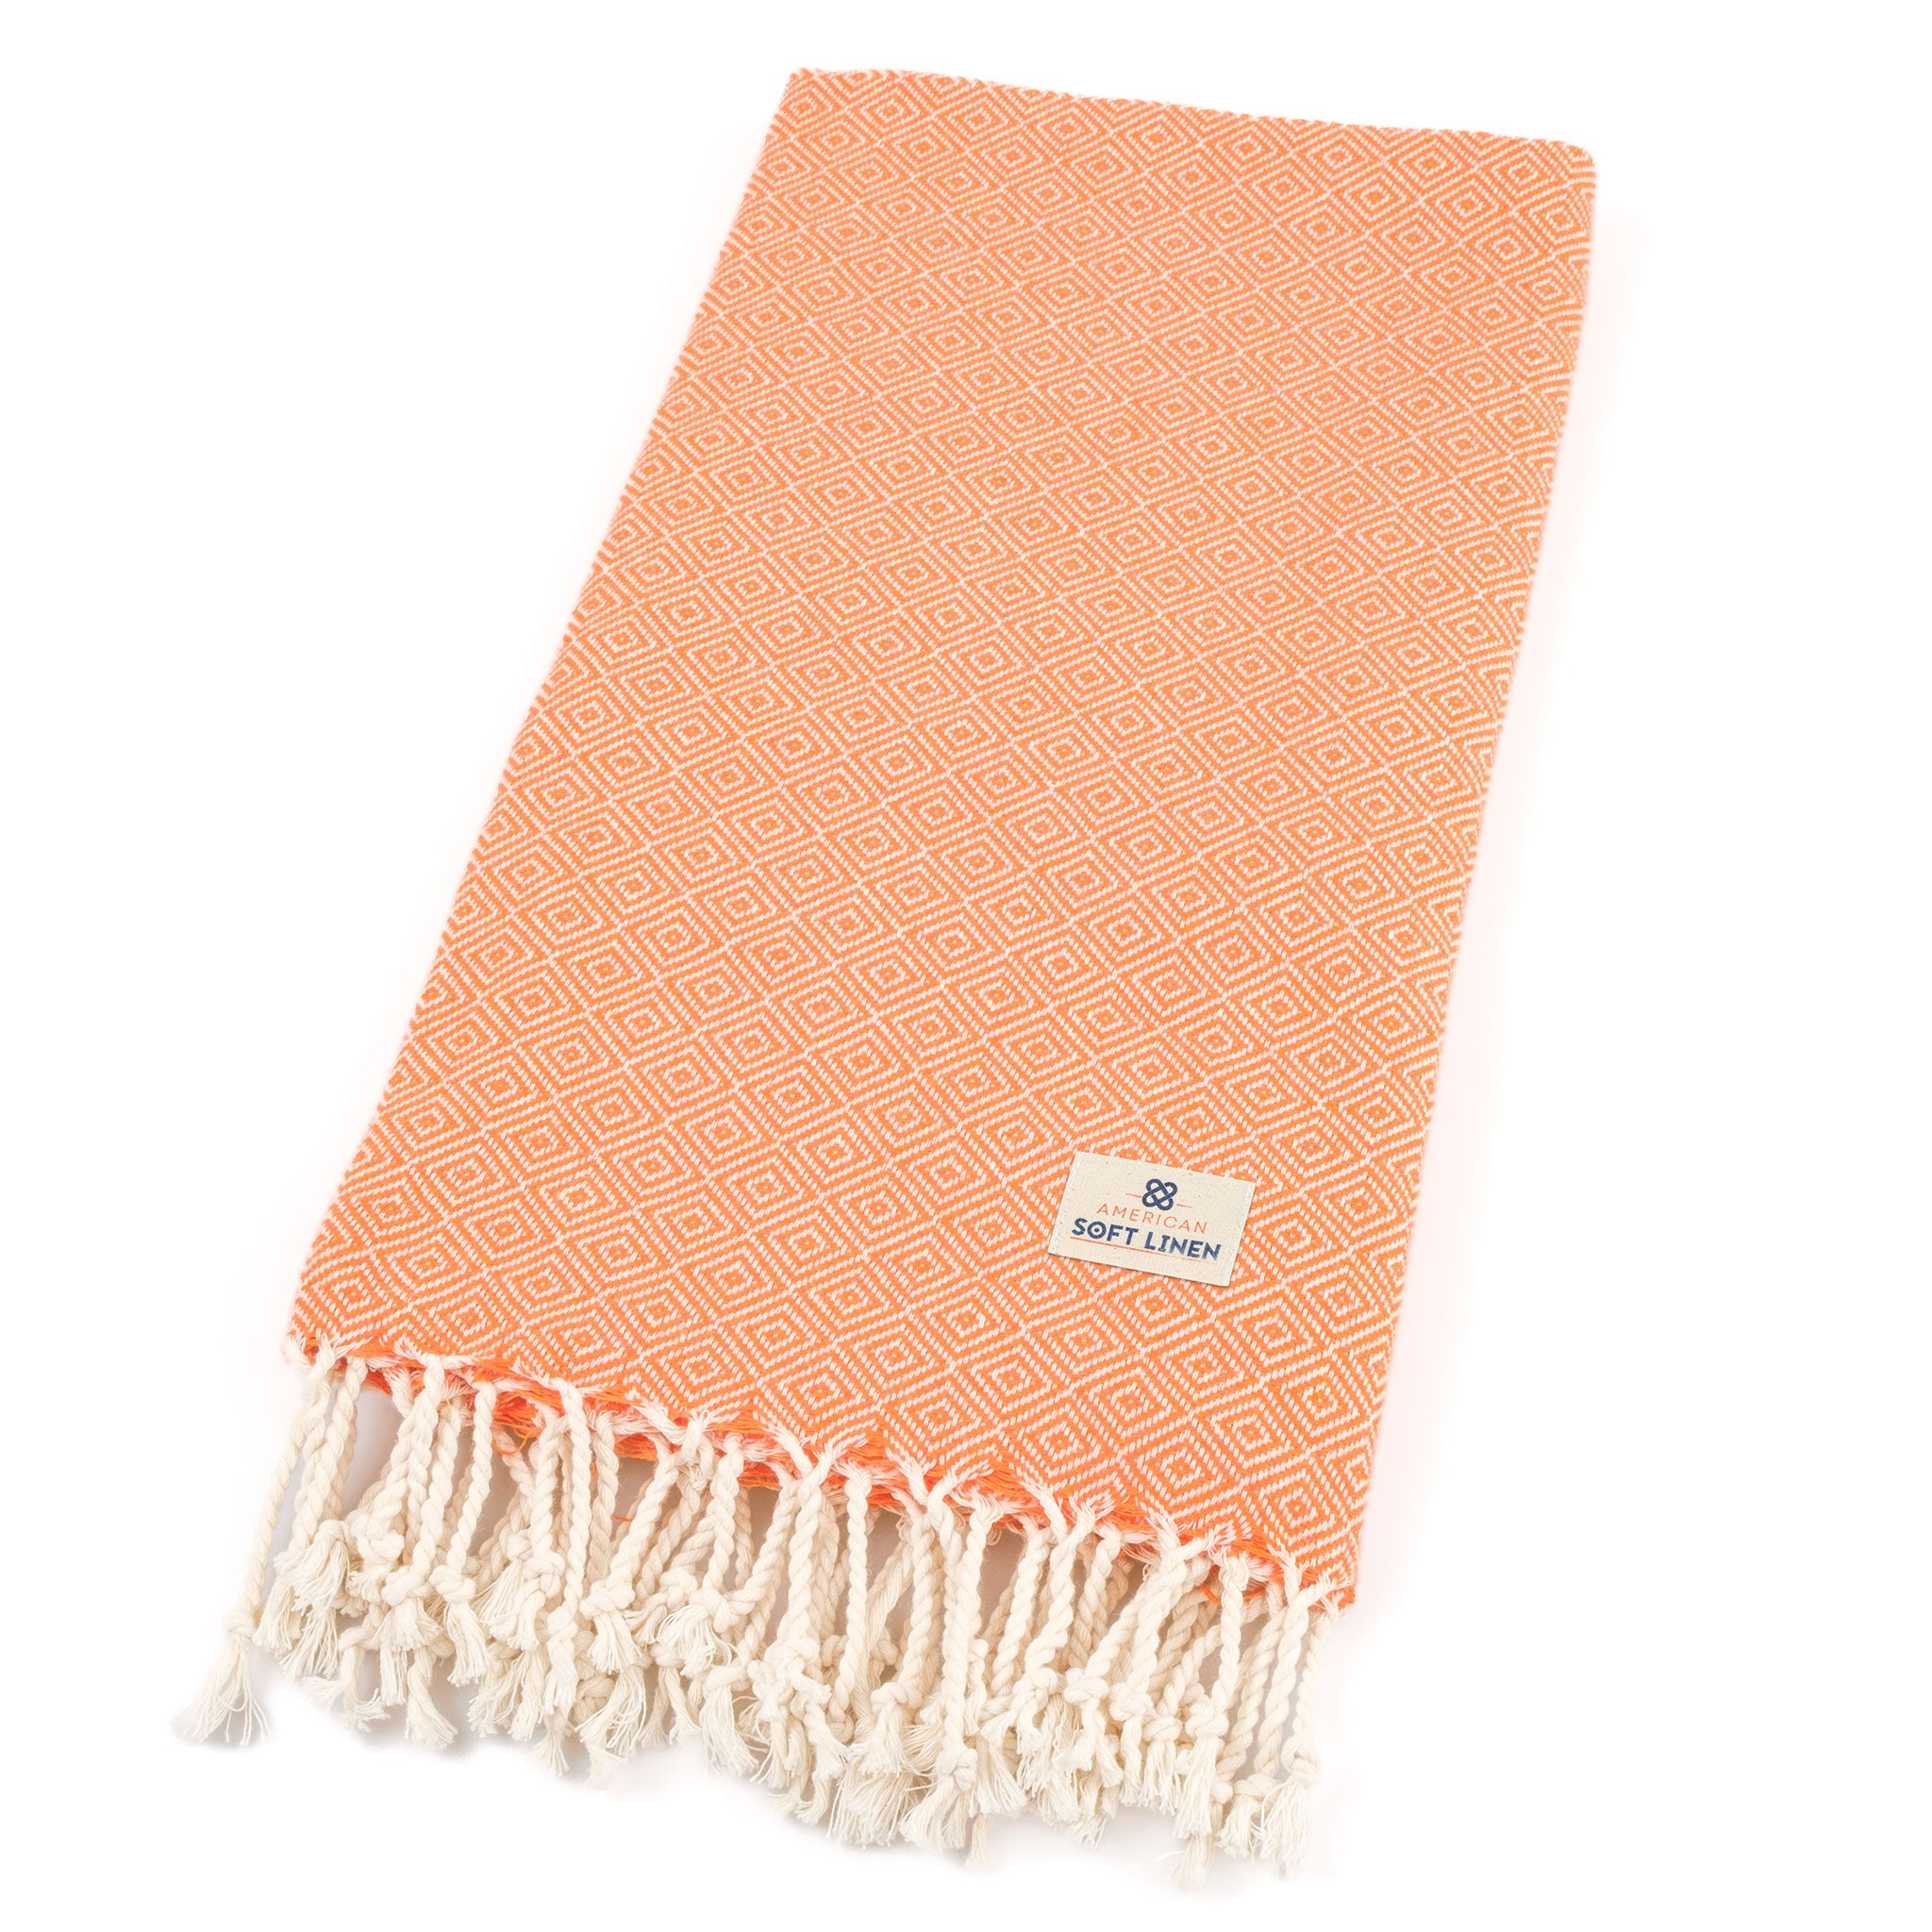 American Soft Linen - 100% Cotton Turkish Peshtemal Towels 40x70 Inches - Orange - 5